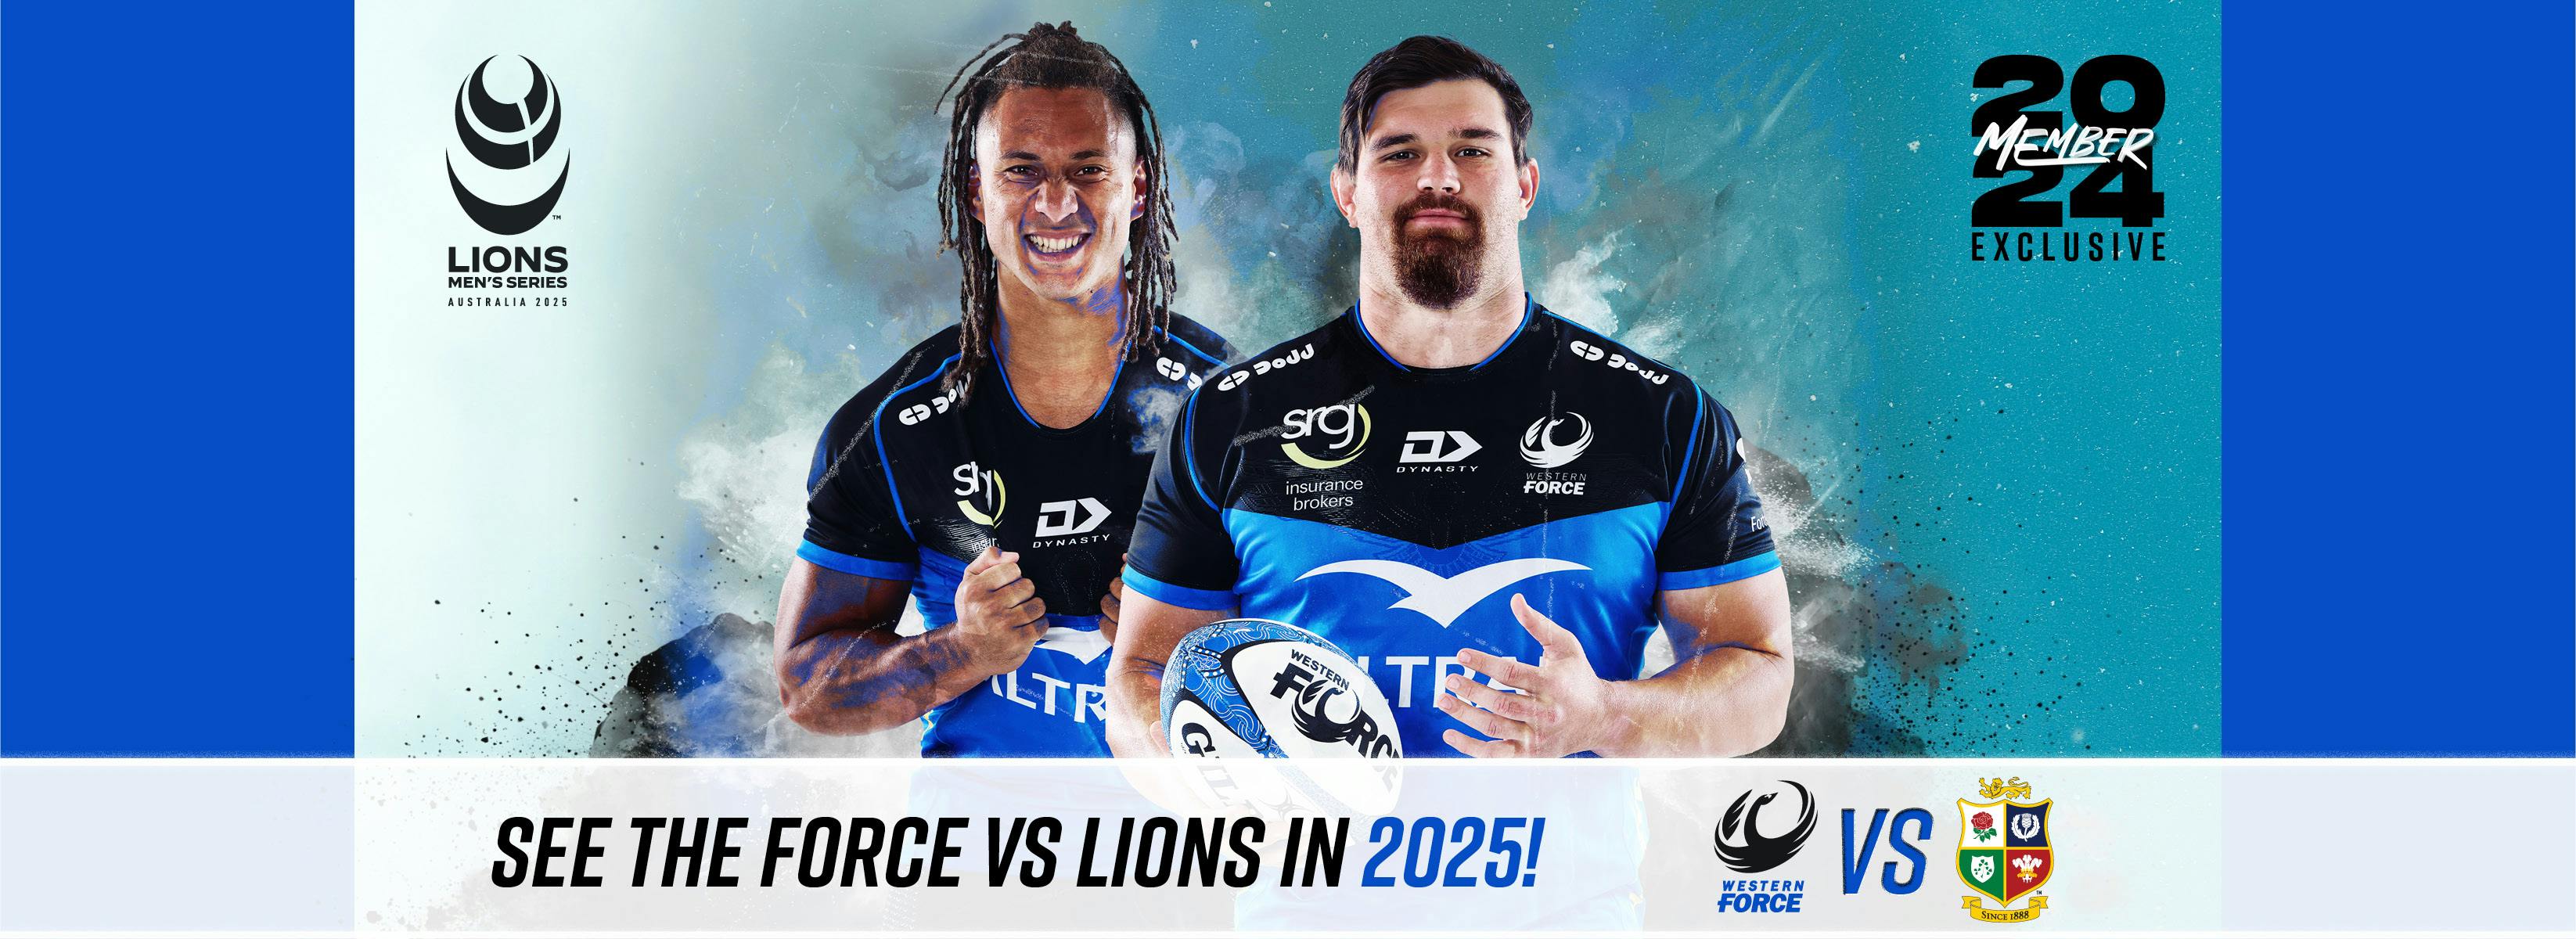 WF Announcement Lions 2025 Initial Announcement Web Header